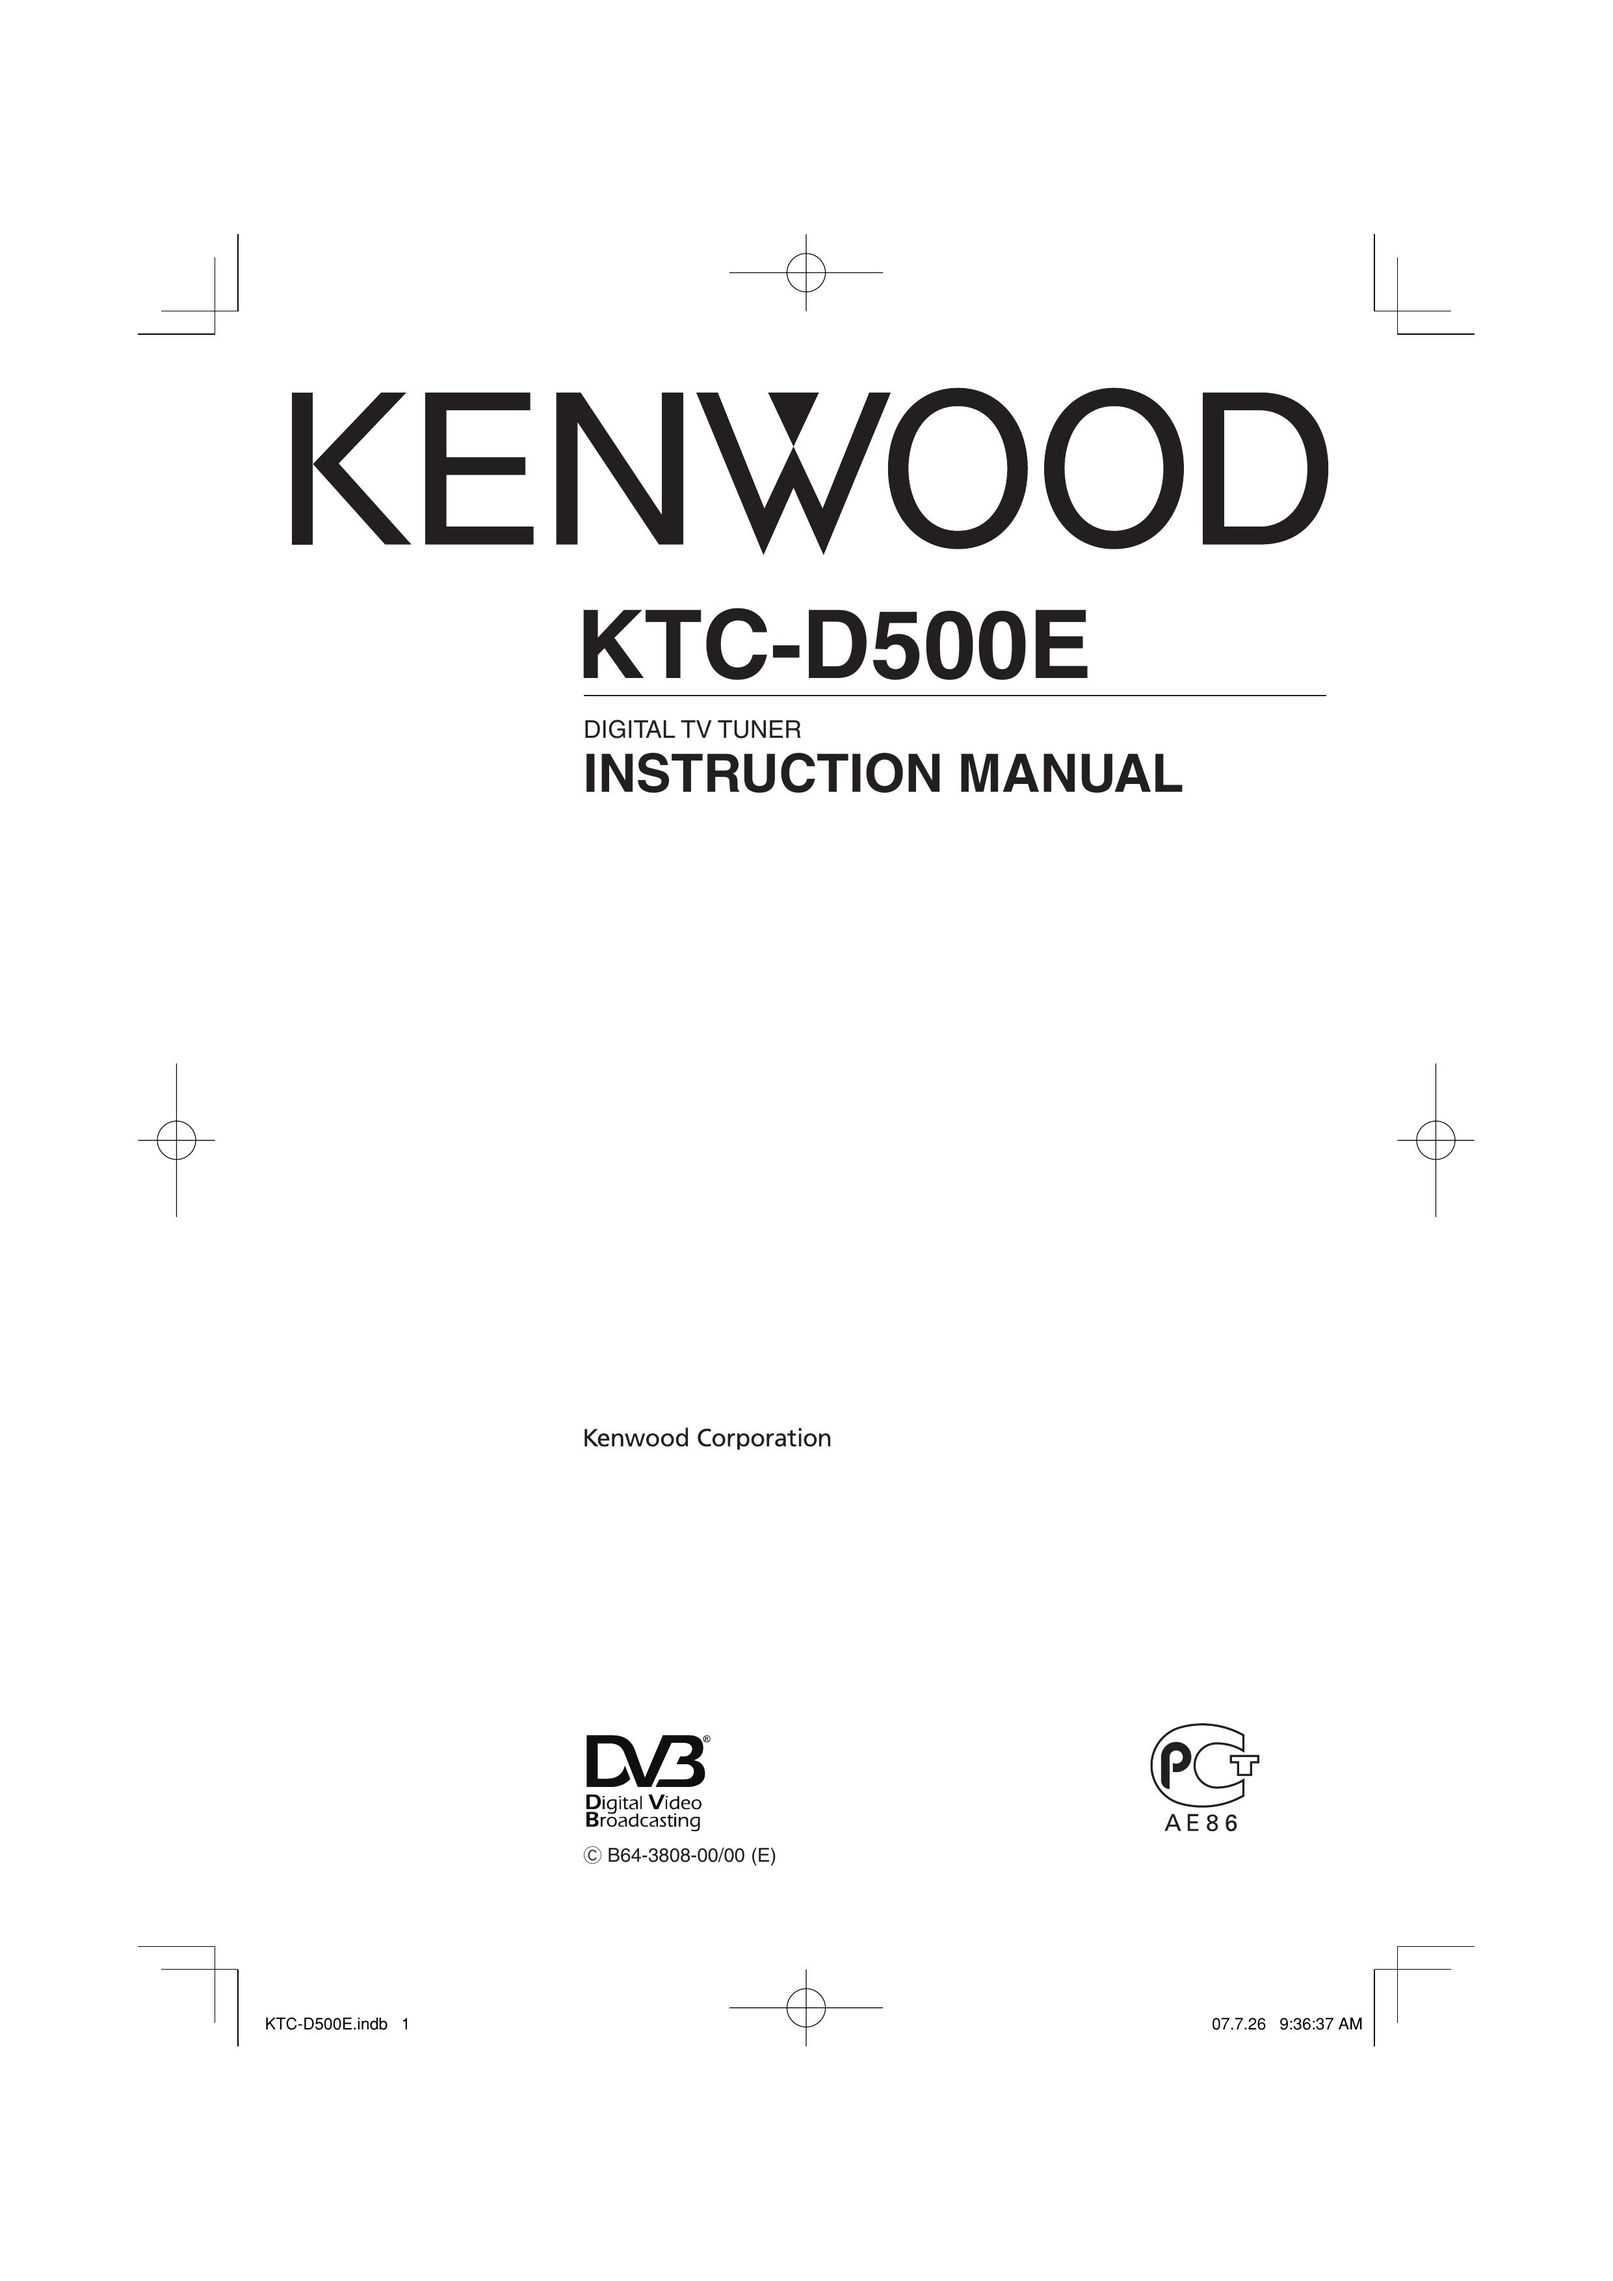 Kenwood KTC-D500E TV Receiver User Manual